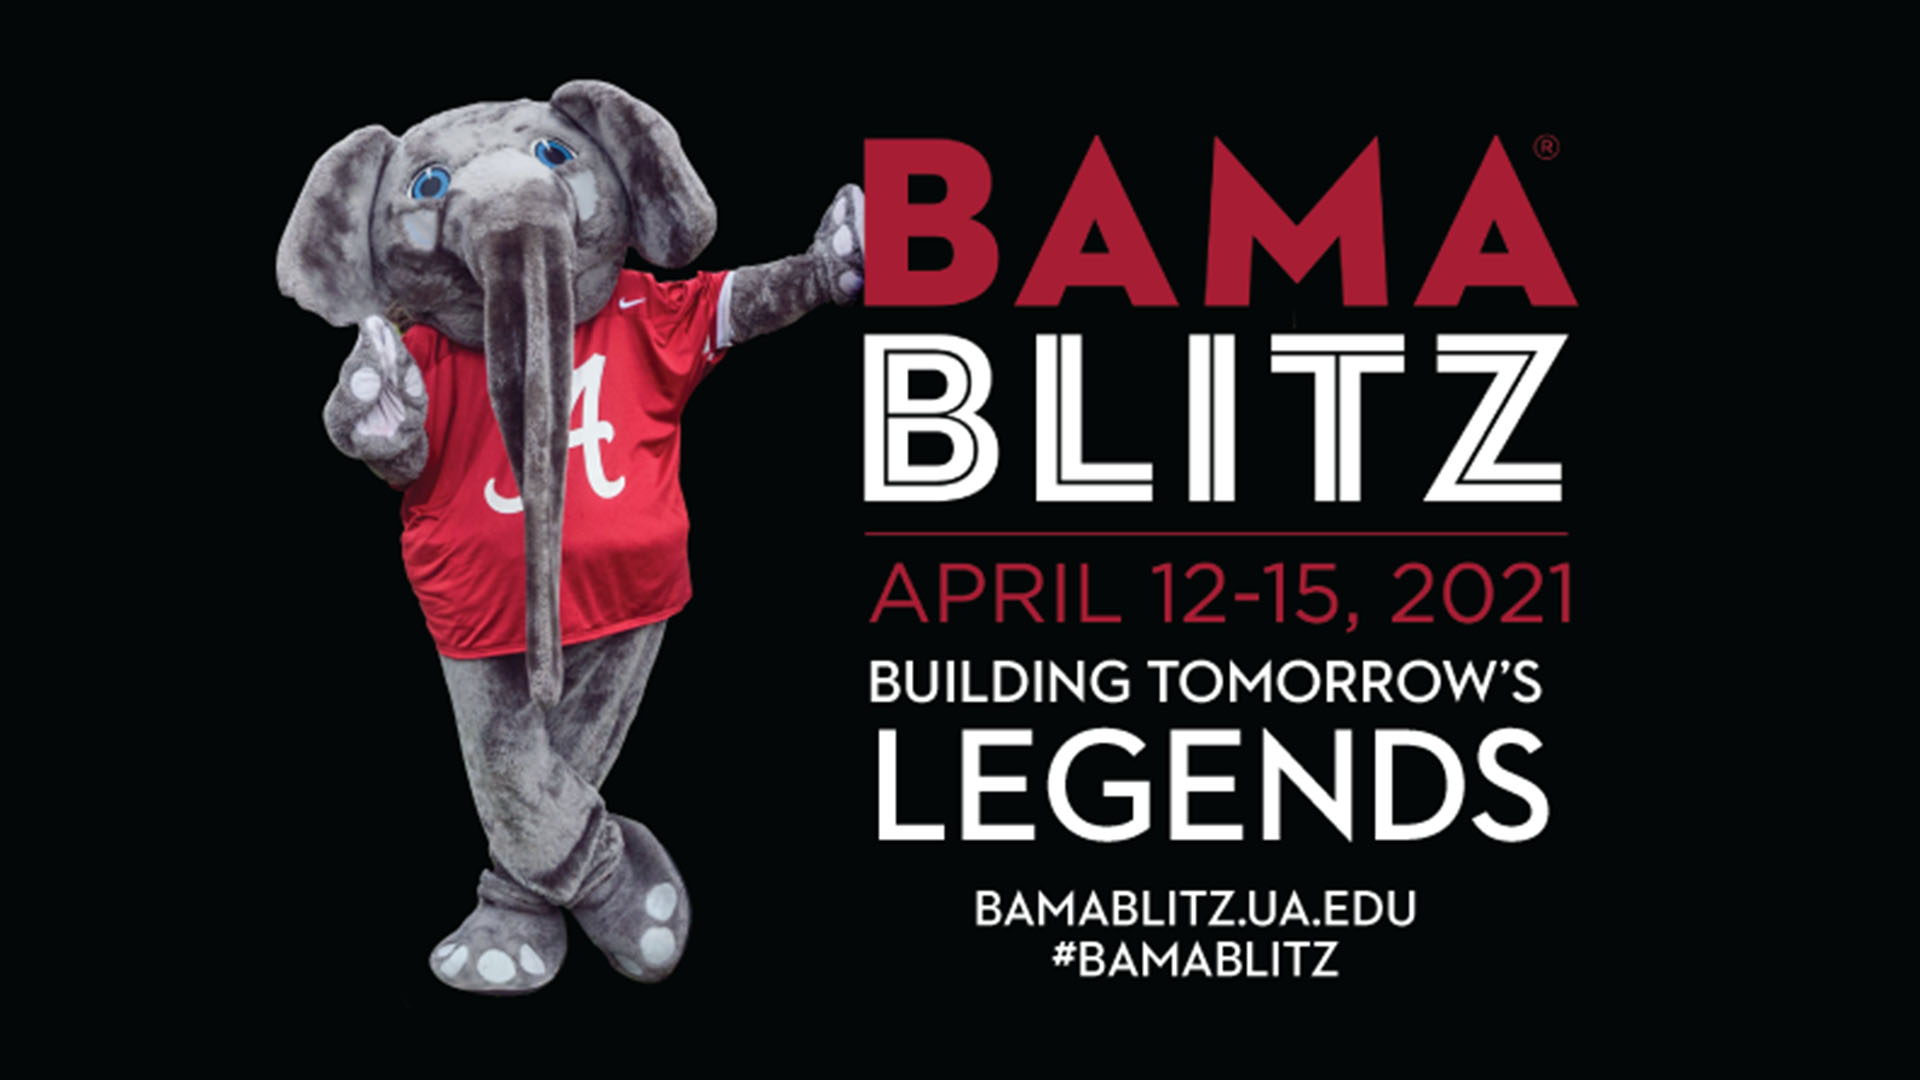 Big Al mascot stands next to text reading "Bama Blitz" April 12 through 12, 2021, Building tomorrow's legeneds bamablitzua.edu #BamaBlitz